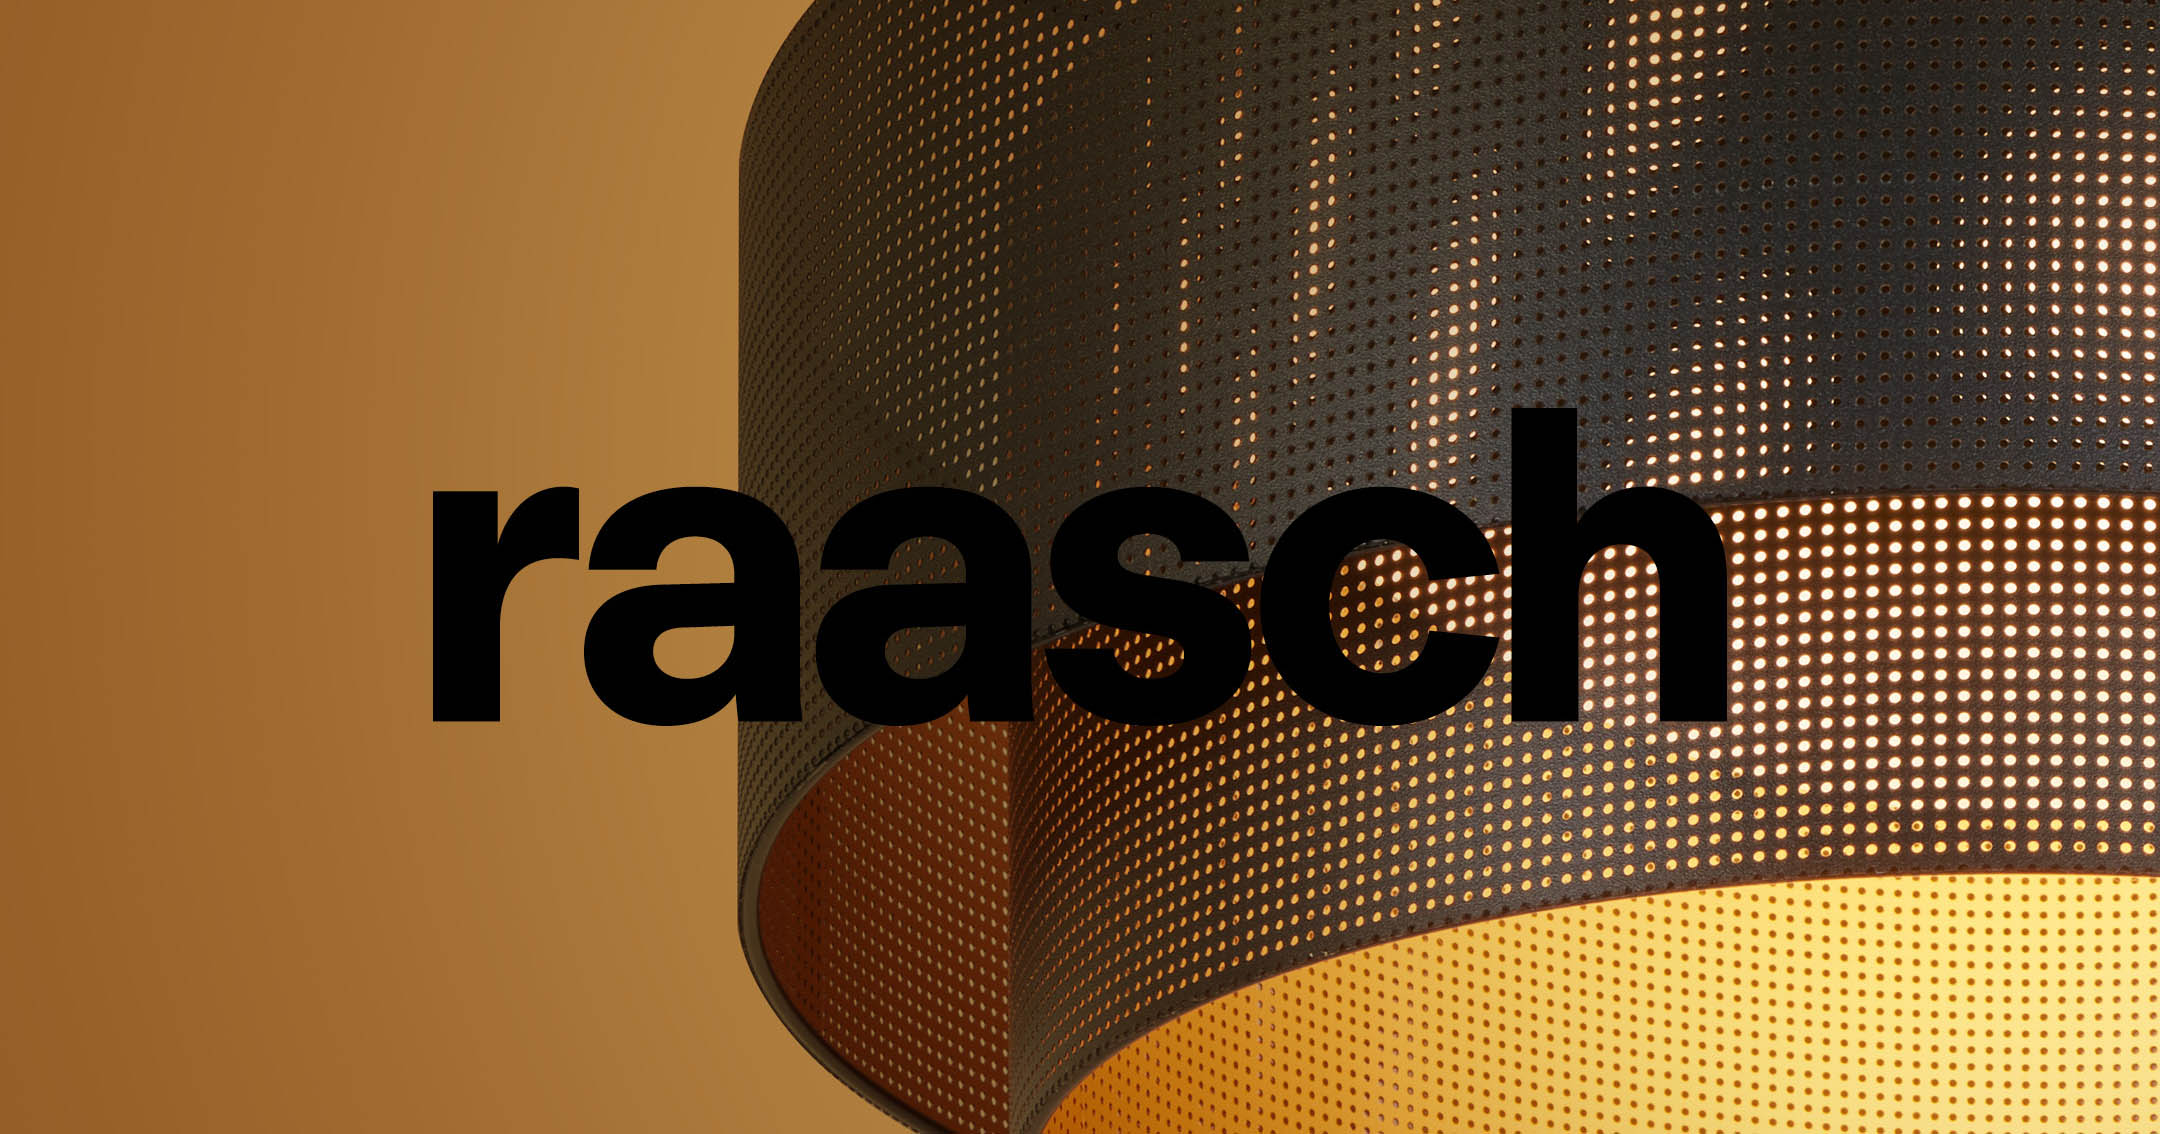 (c) Raasch-collection.com